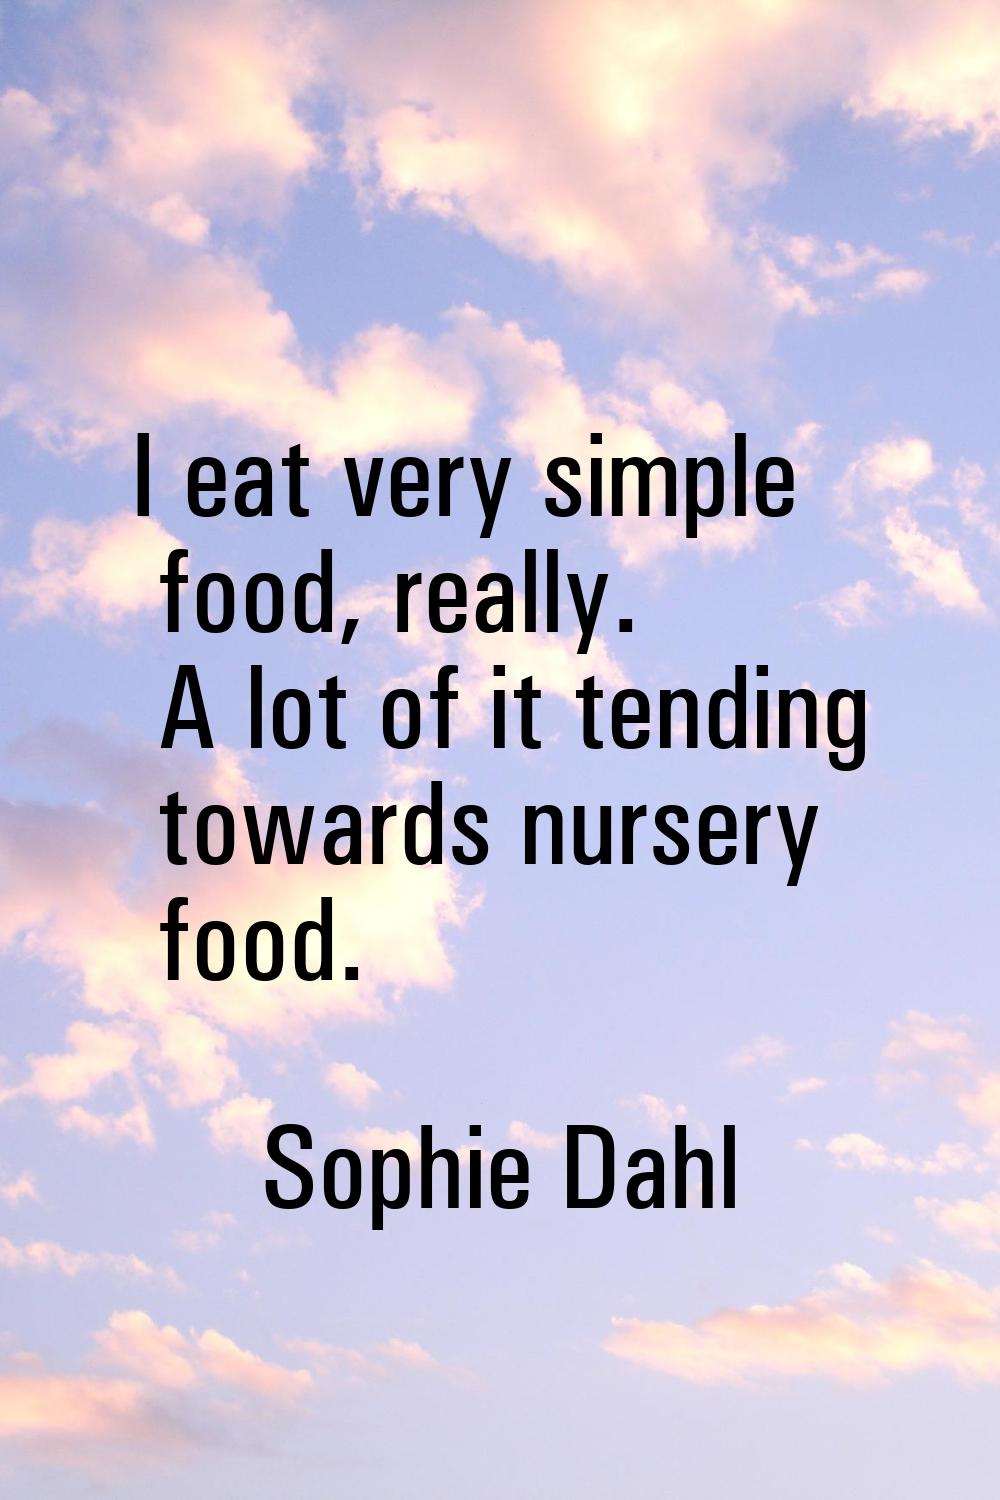 I eat very simple food, really. A lot of it tending towards nursery food.